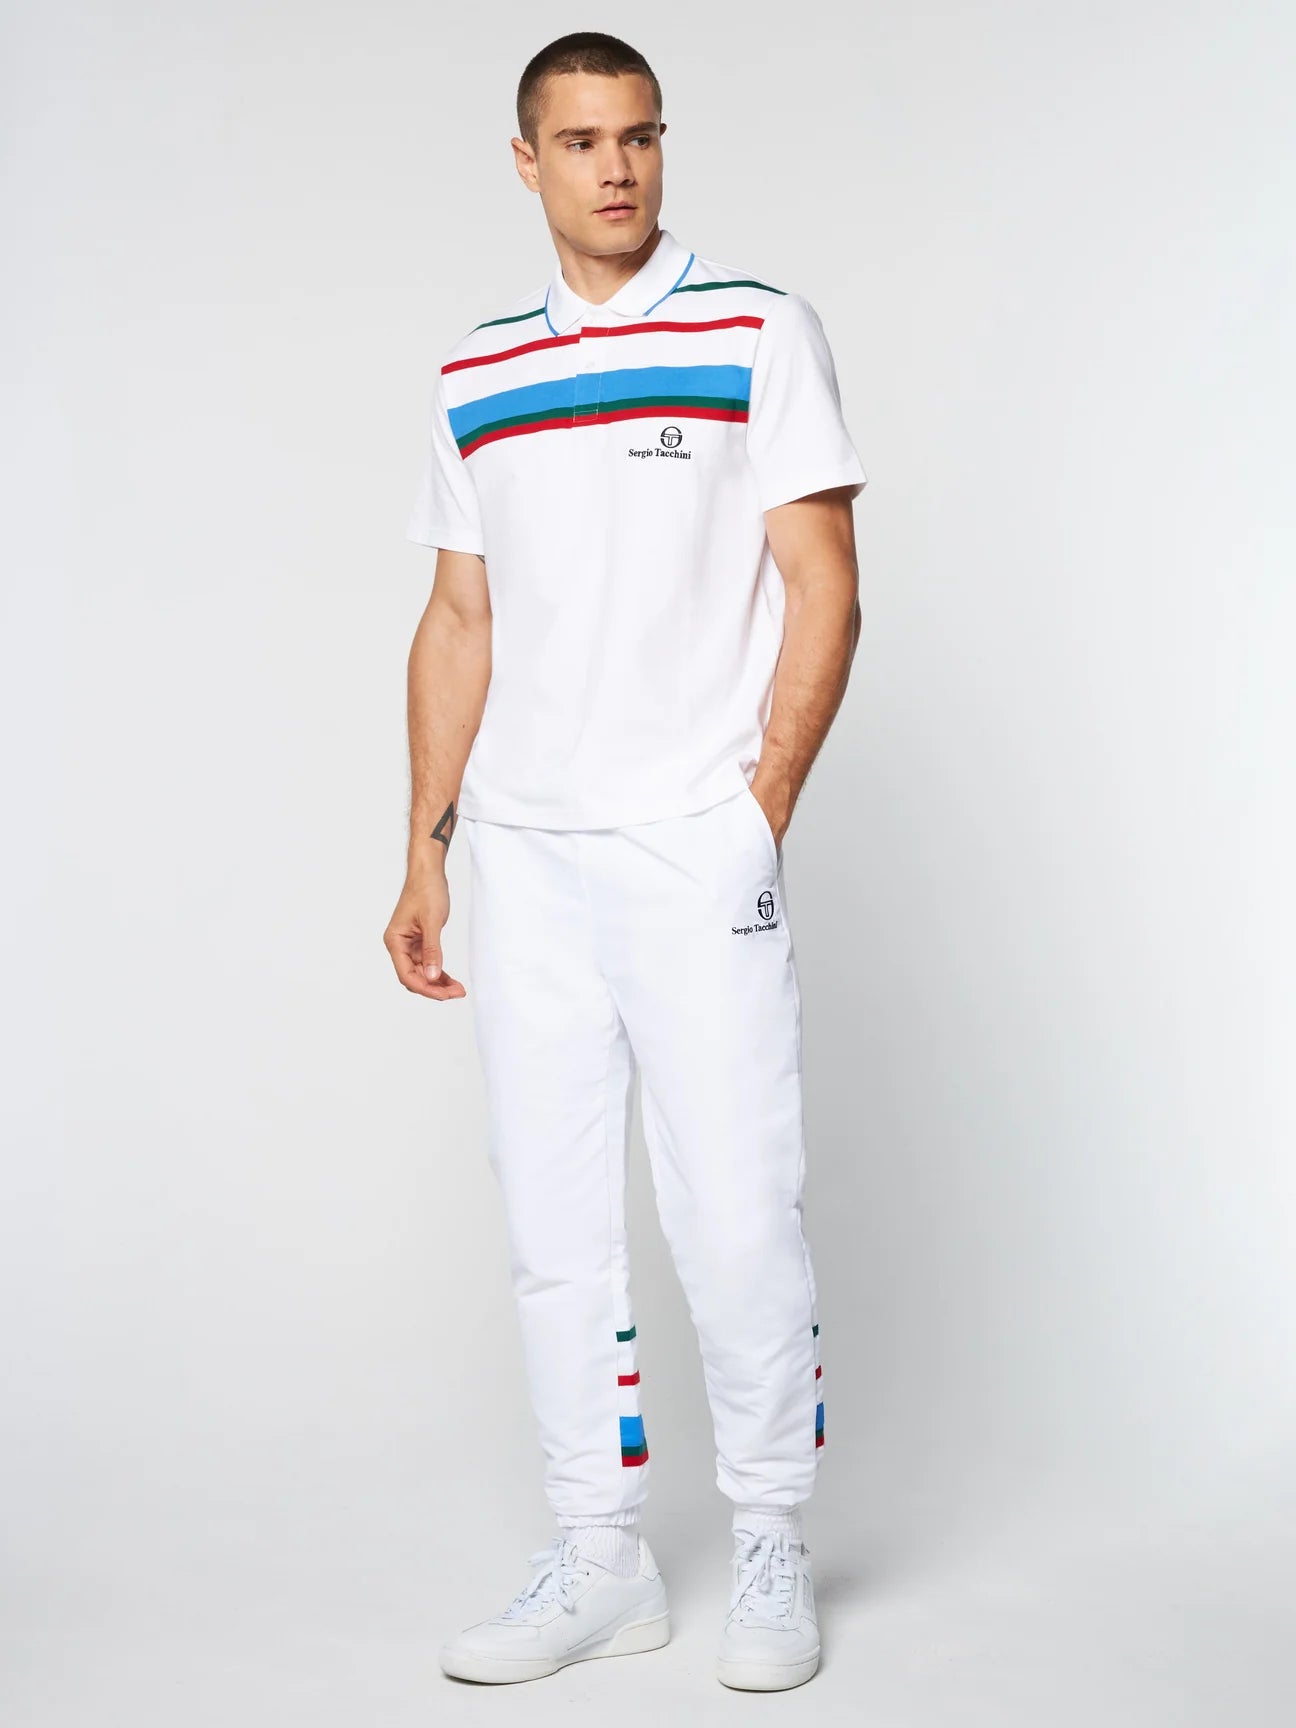 Sergio Tacchini Men's SS Denver Stripe Polo Shirt White